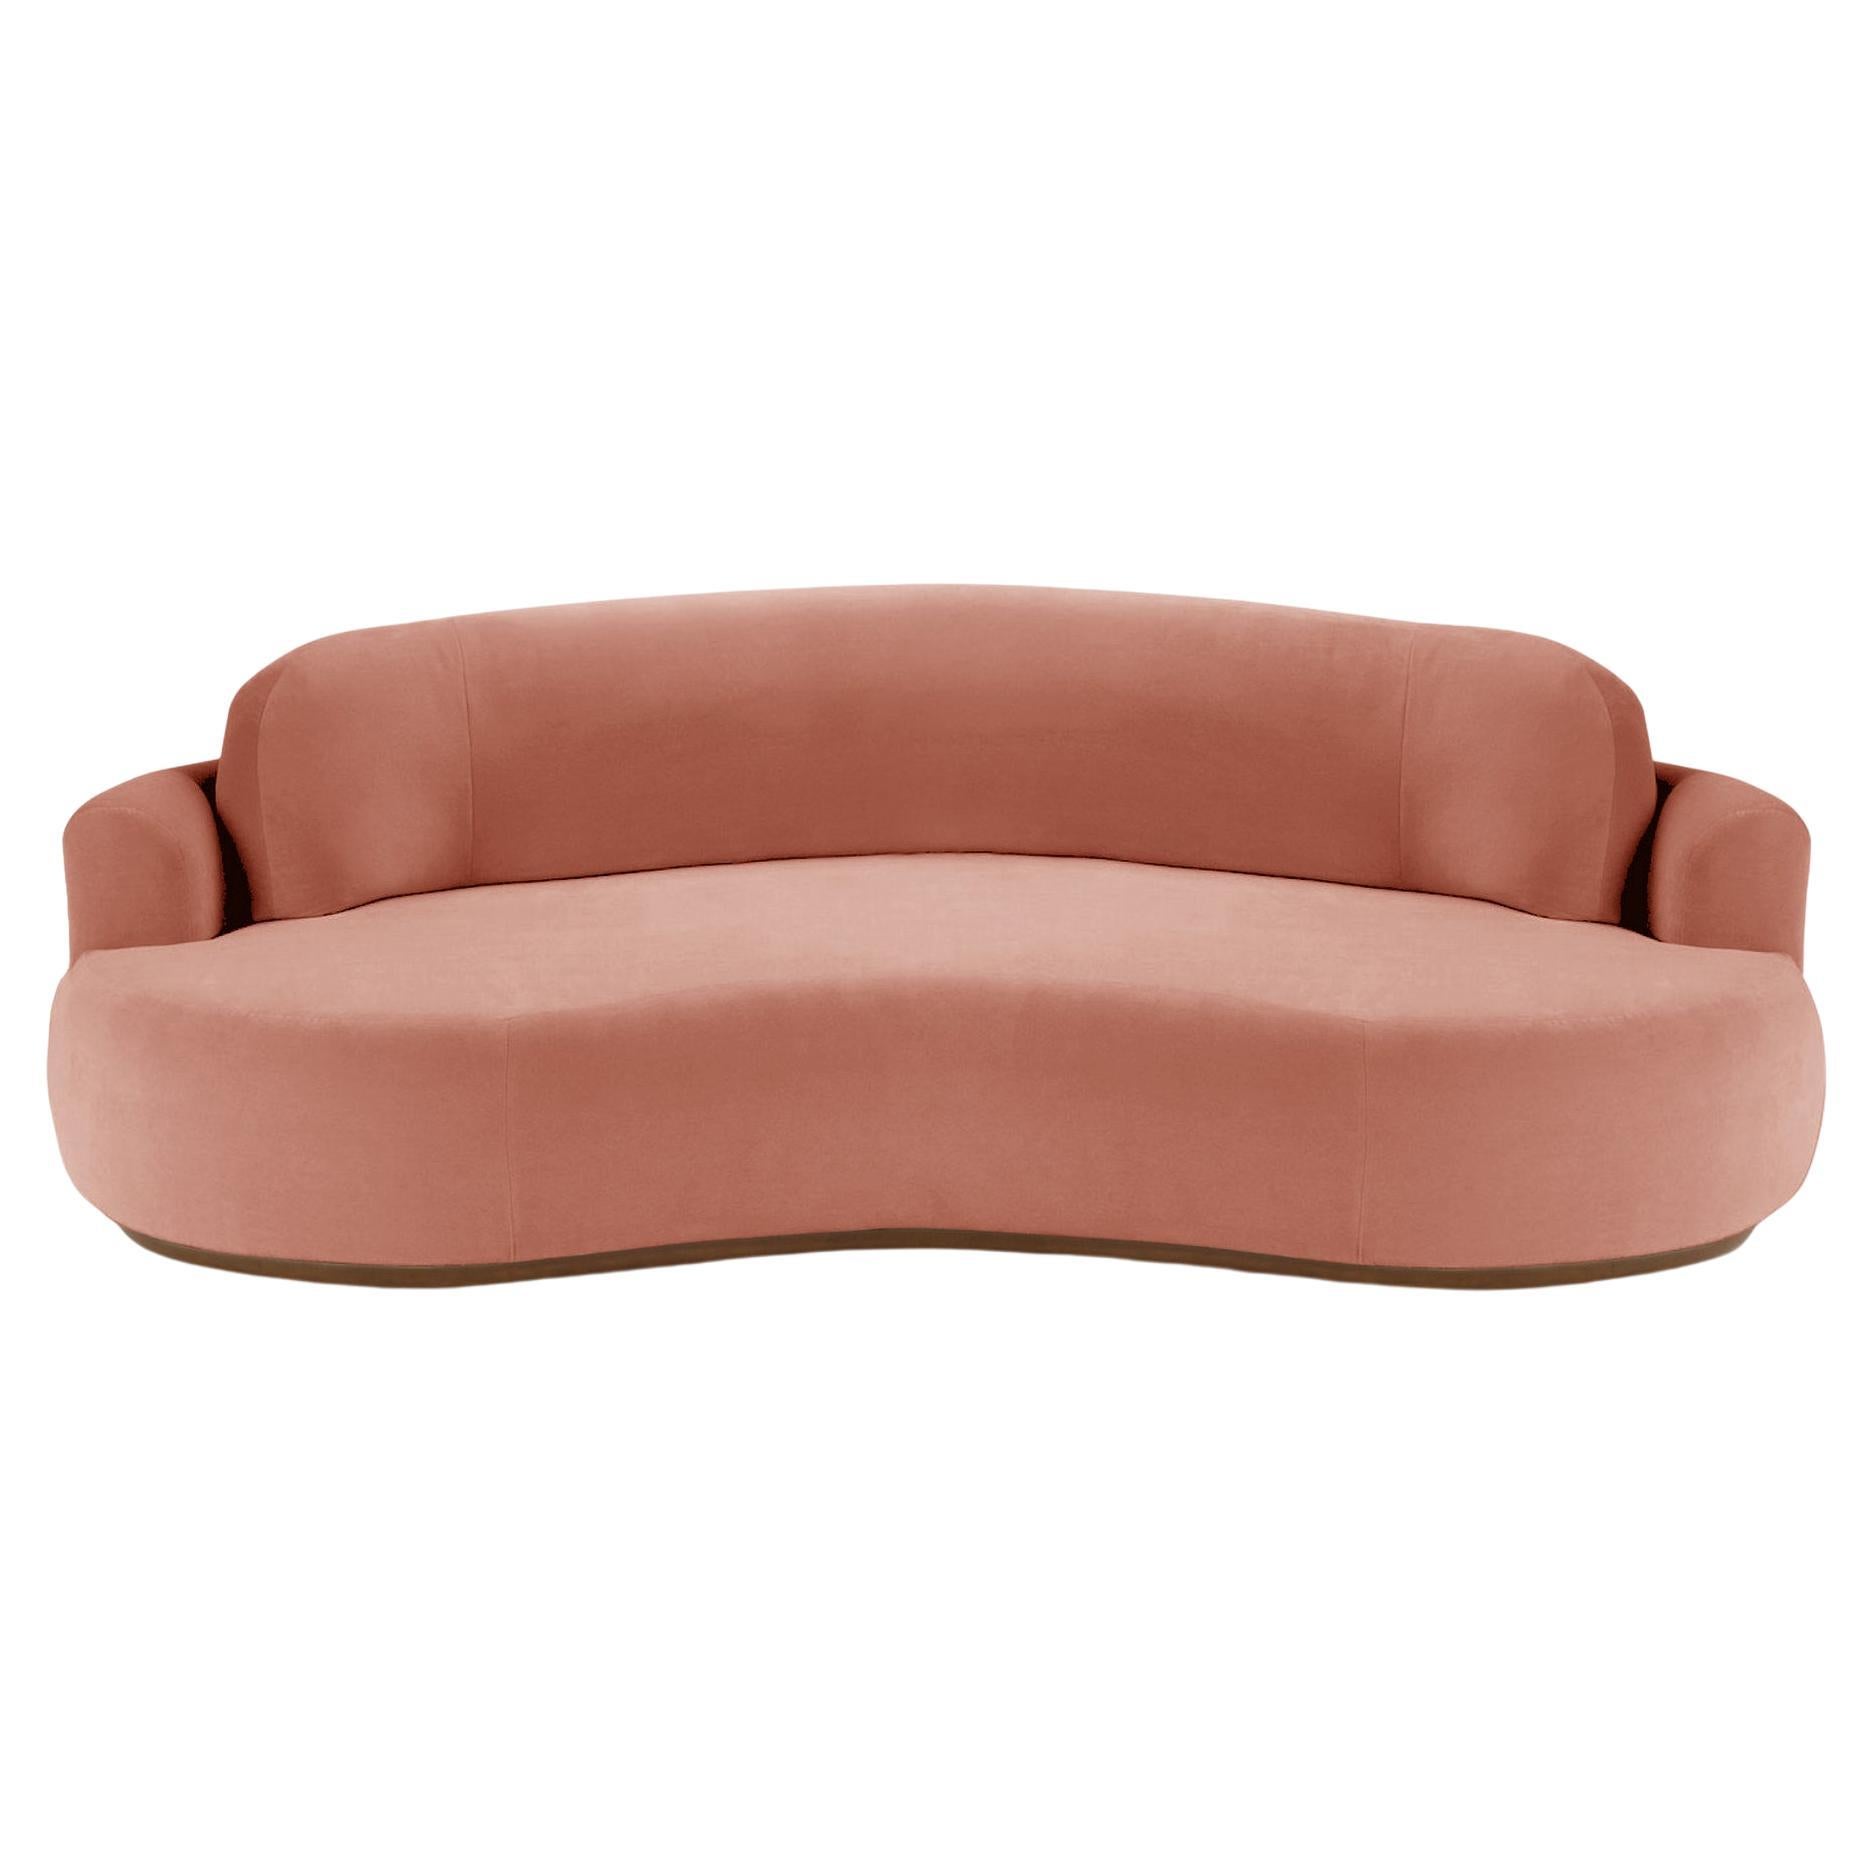 Naked Curved Sofa, Medium with Beech Ash-056-1 and Paris Brick